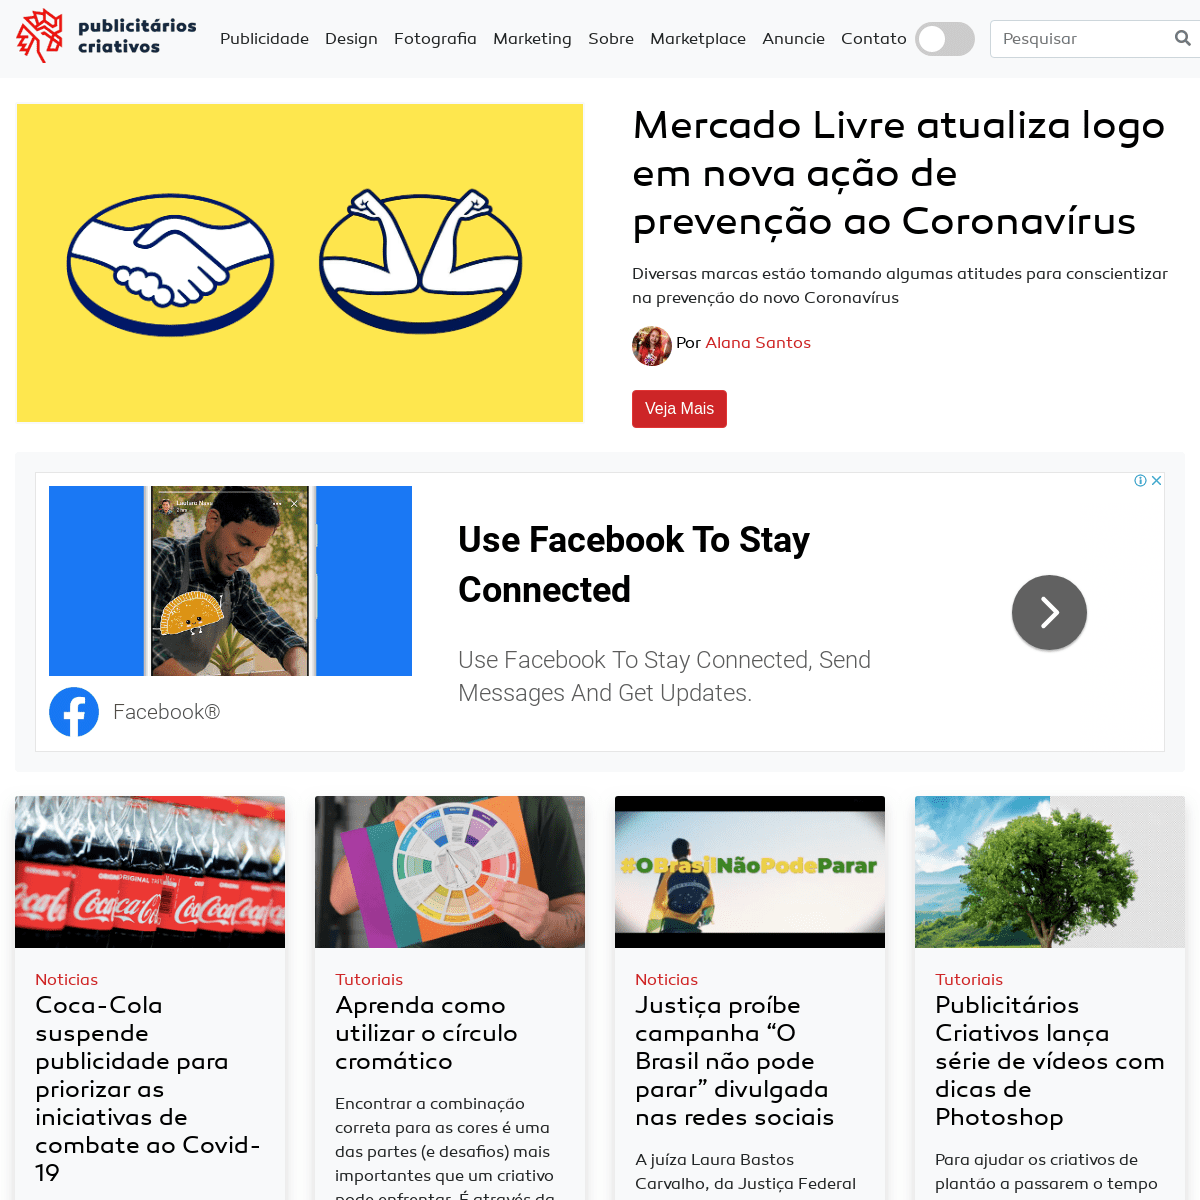 A complete backup of publicitarioscriativos.com